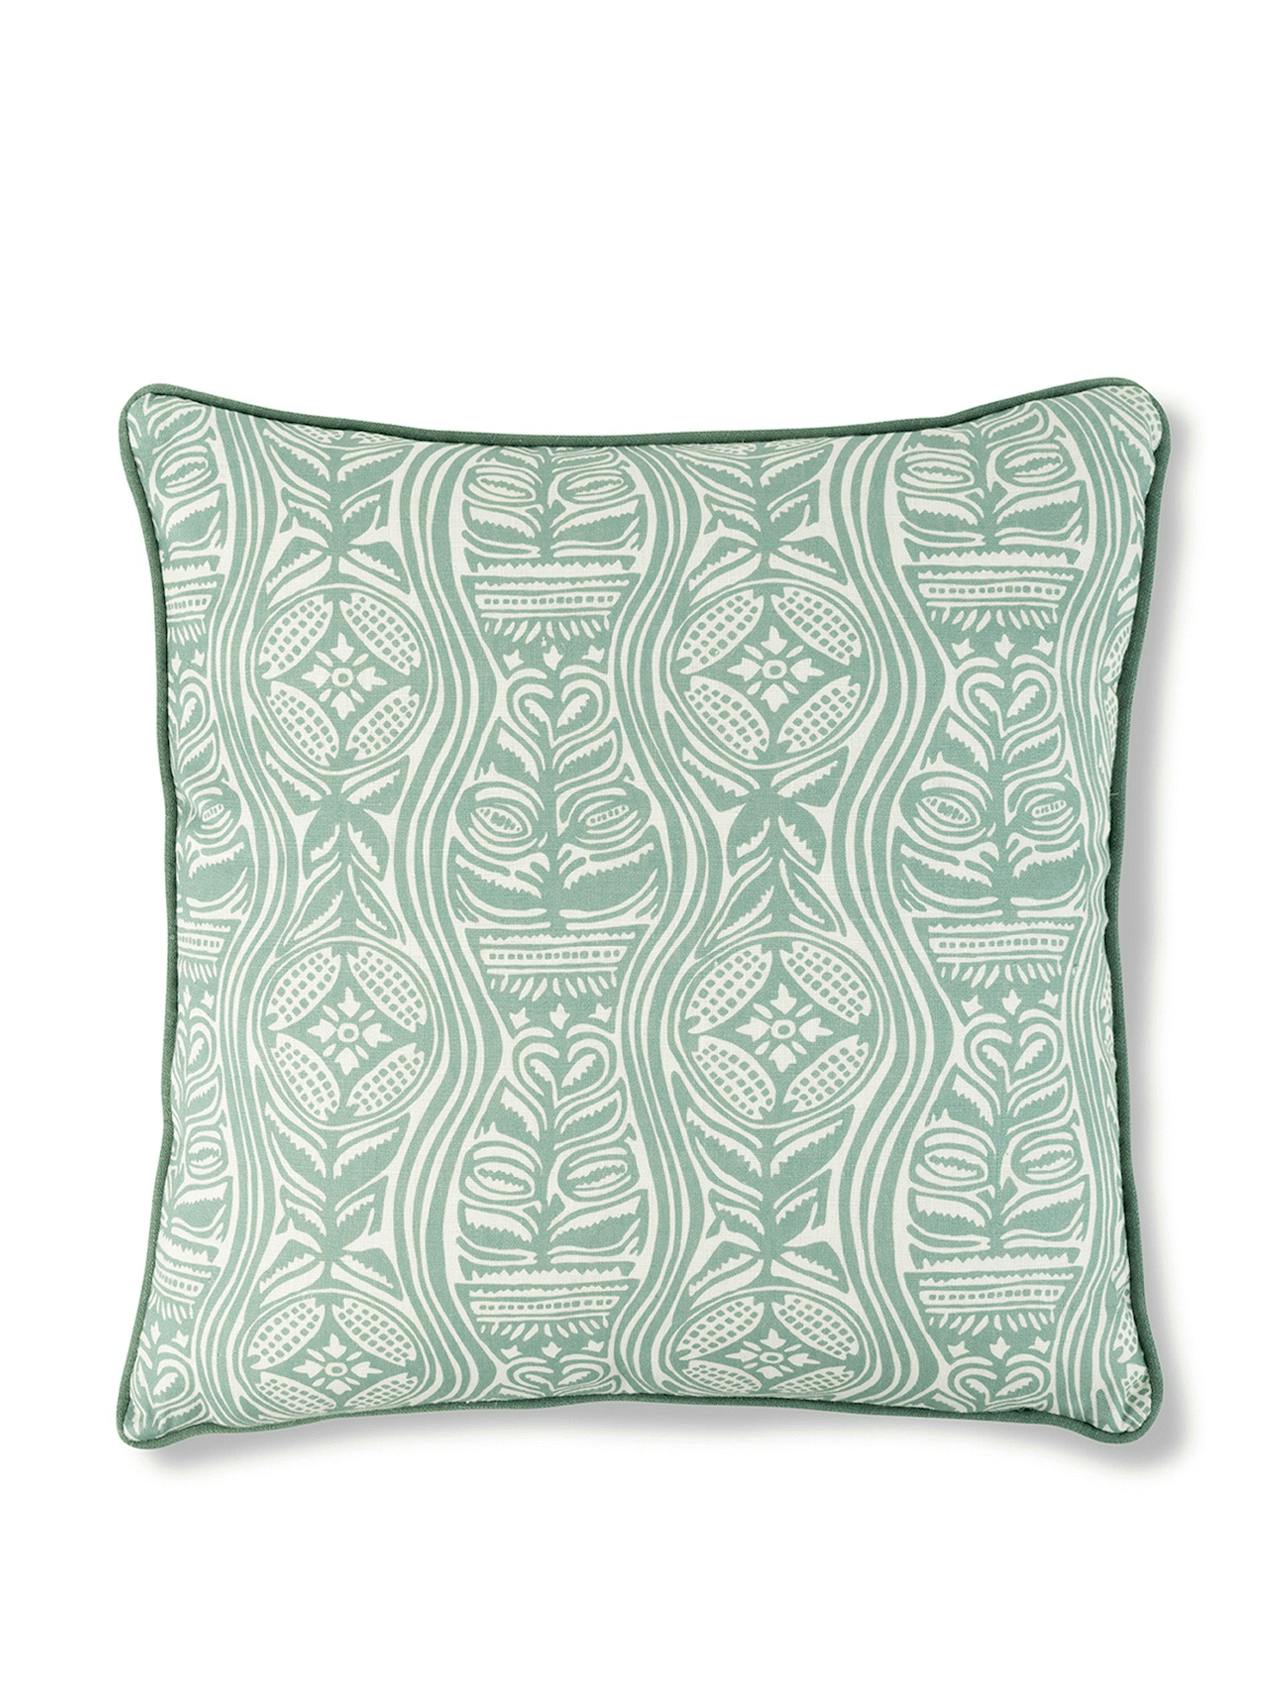 Dacha print cushion in teal with teal trim